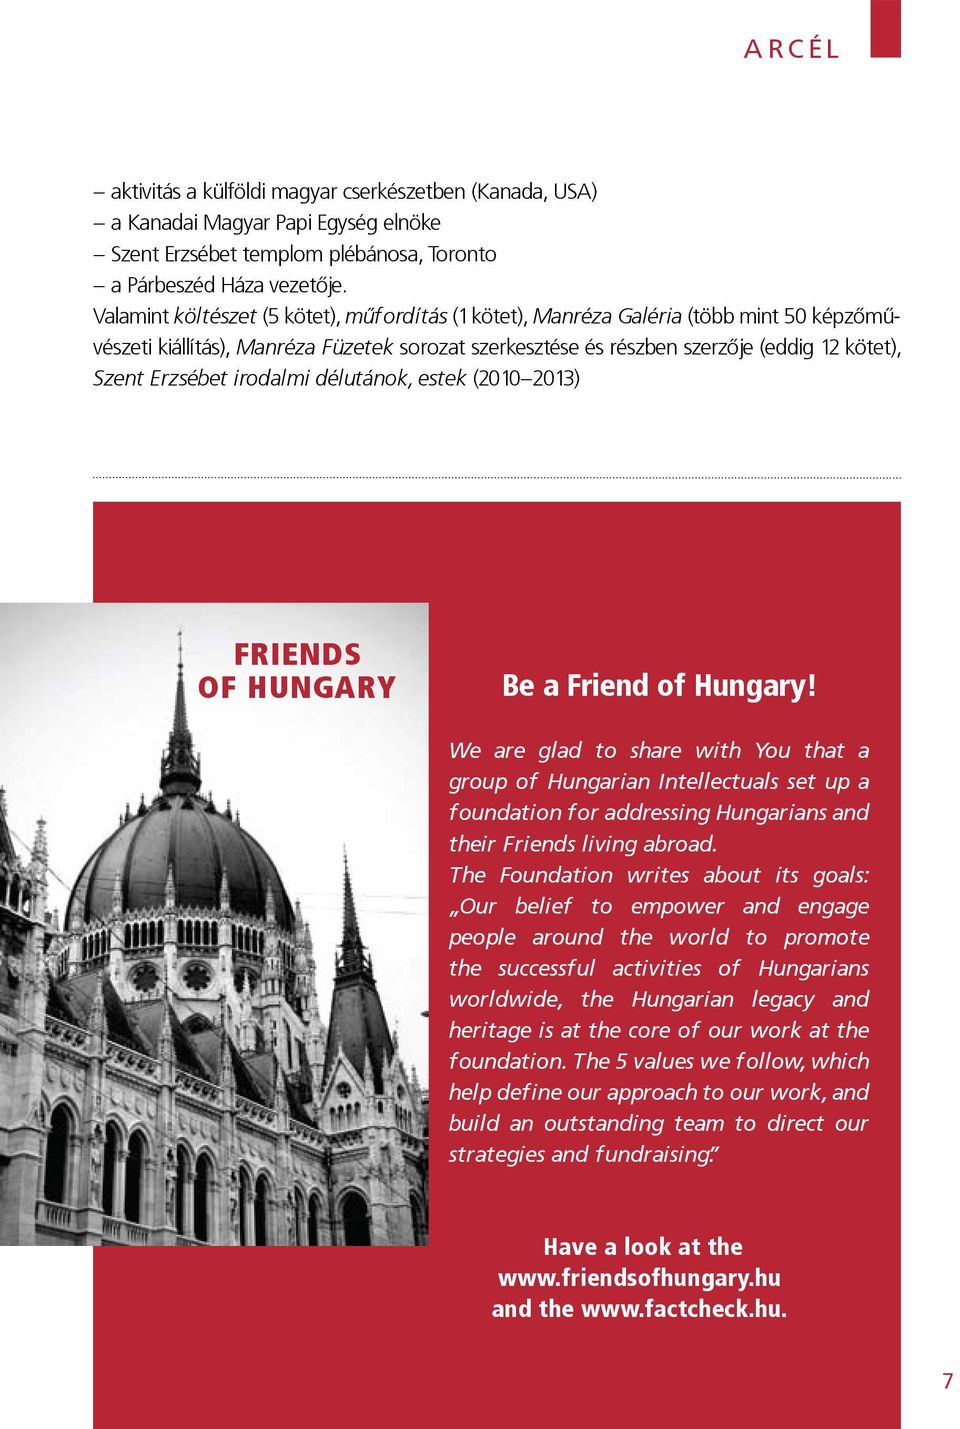 irodalmi délutánok, estek (2010 2013) FRIENDS OF HUNGARY Be a Friend of Hungary!